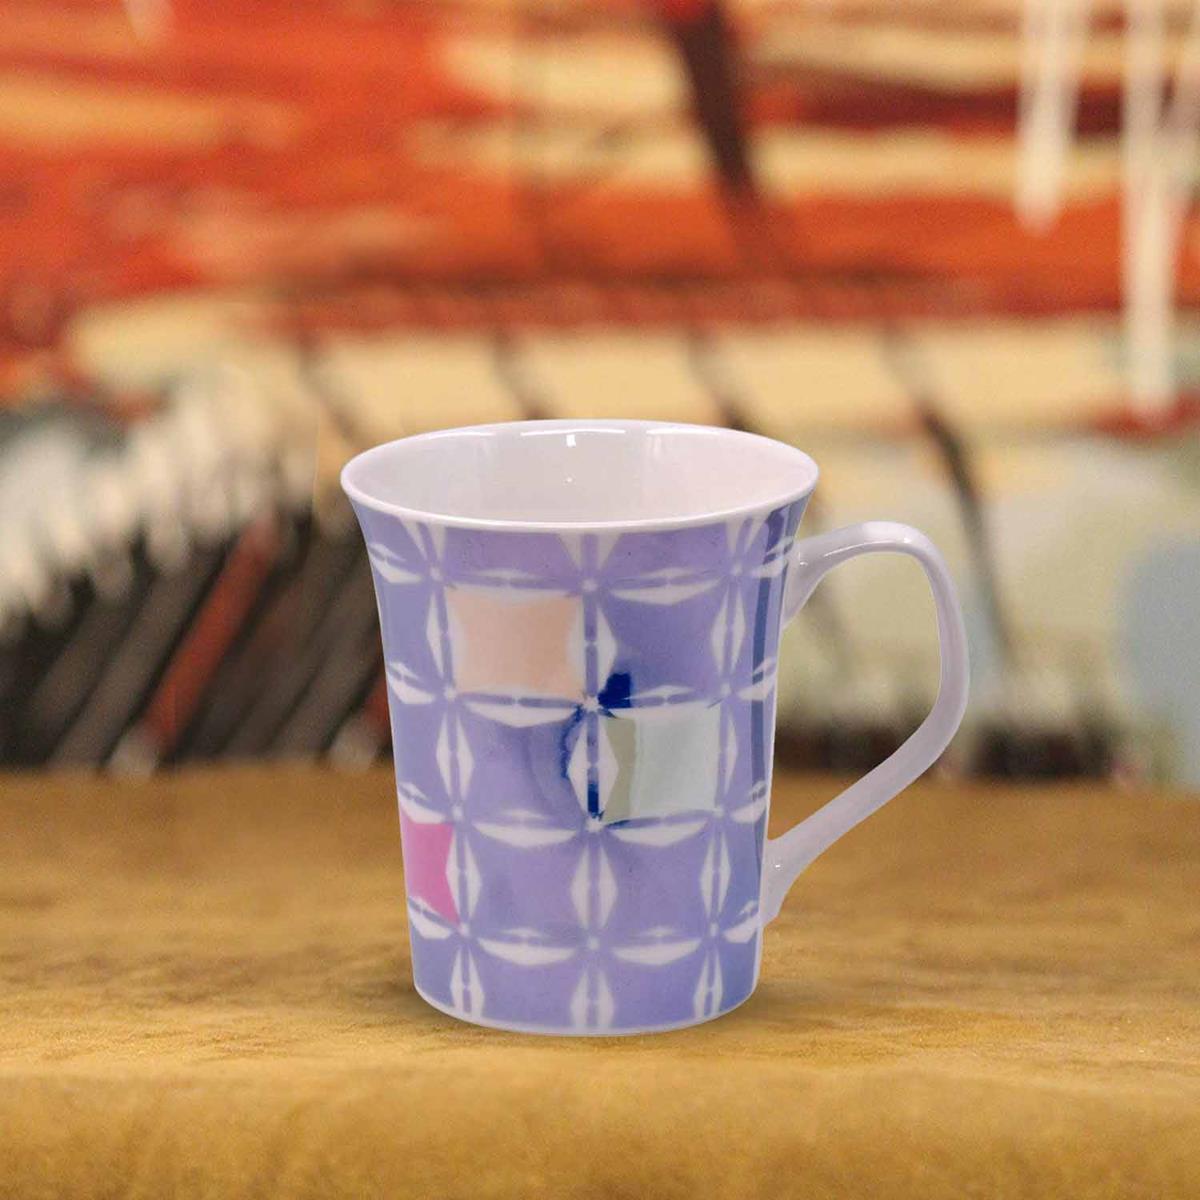 Printed Ceramic Tall Coffee or Tea Mug with handle - 325ml (4118-A)